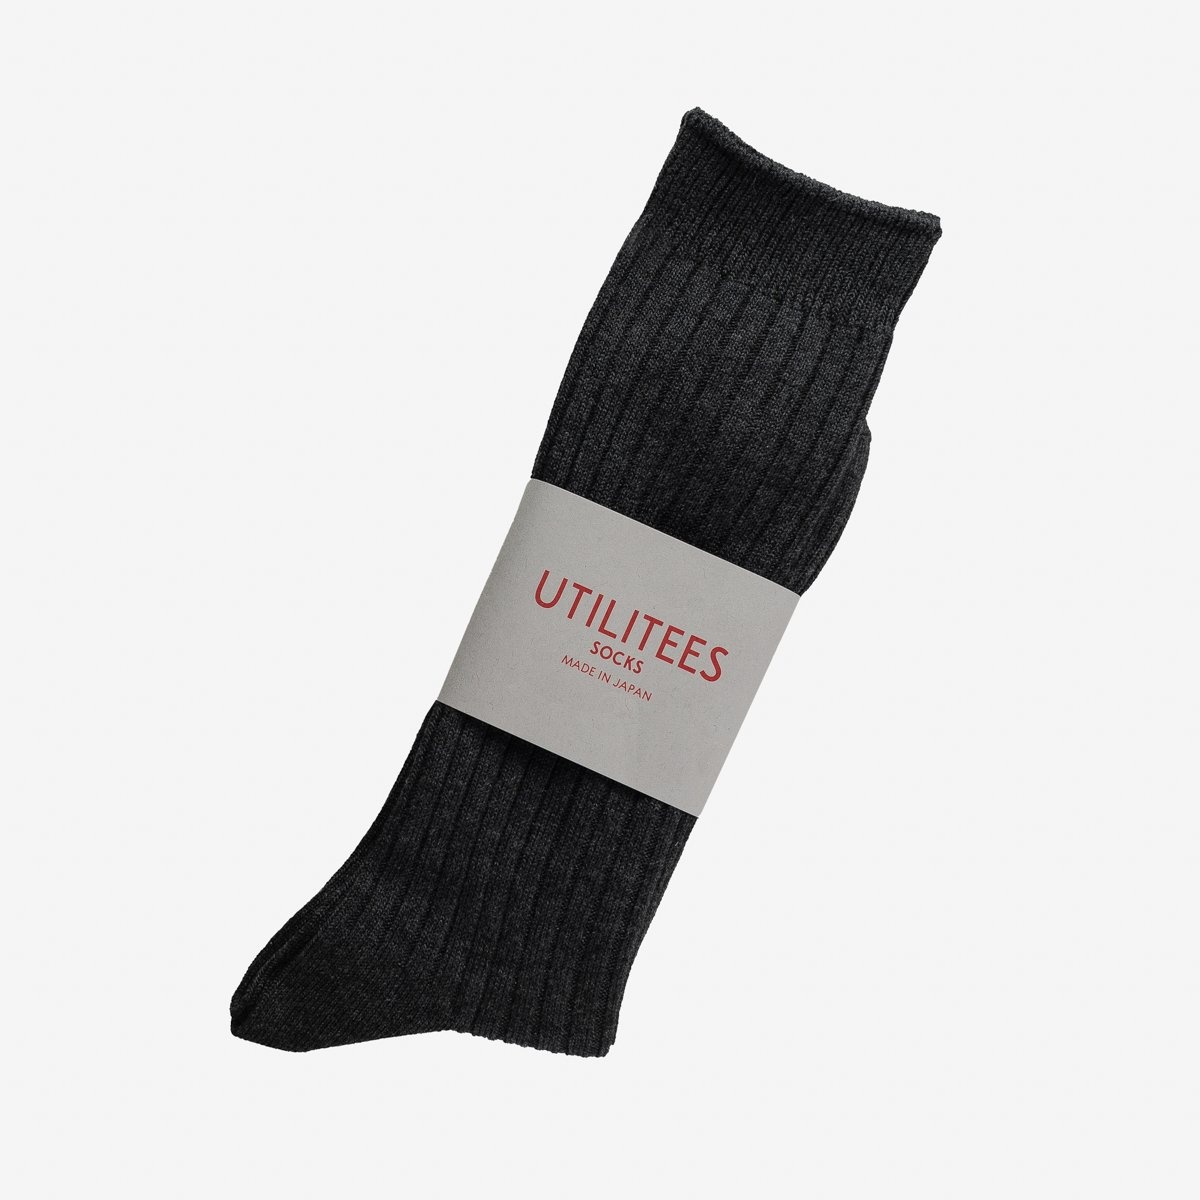 UTCS-CGR UTILITEES Mixed Cotton Crew Socks - Charcoal Grey - 2